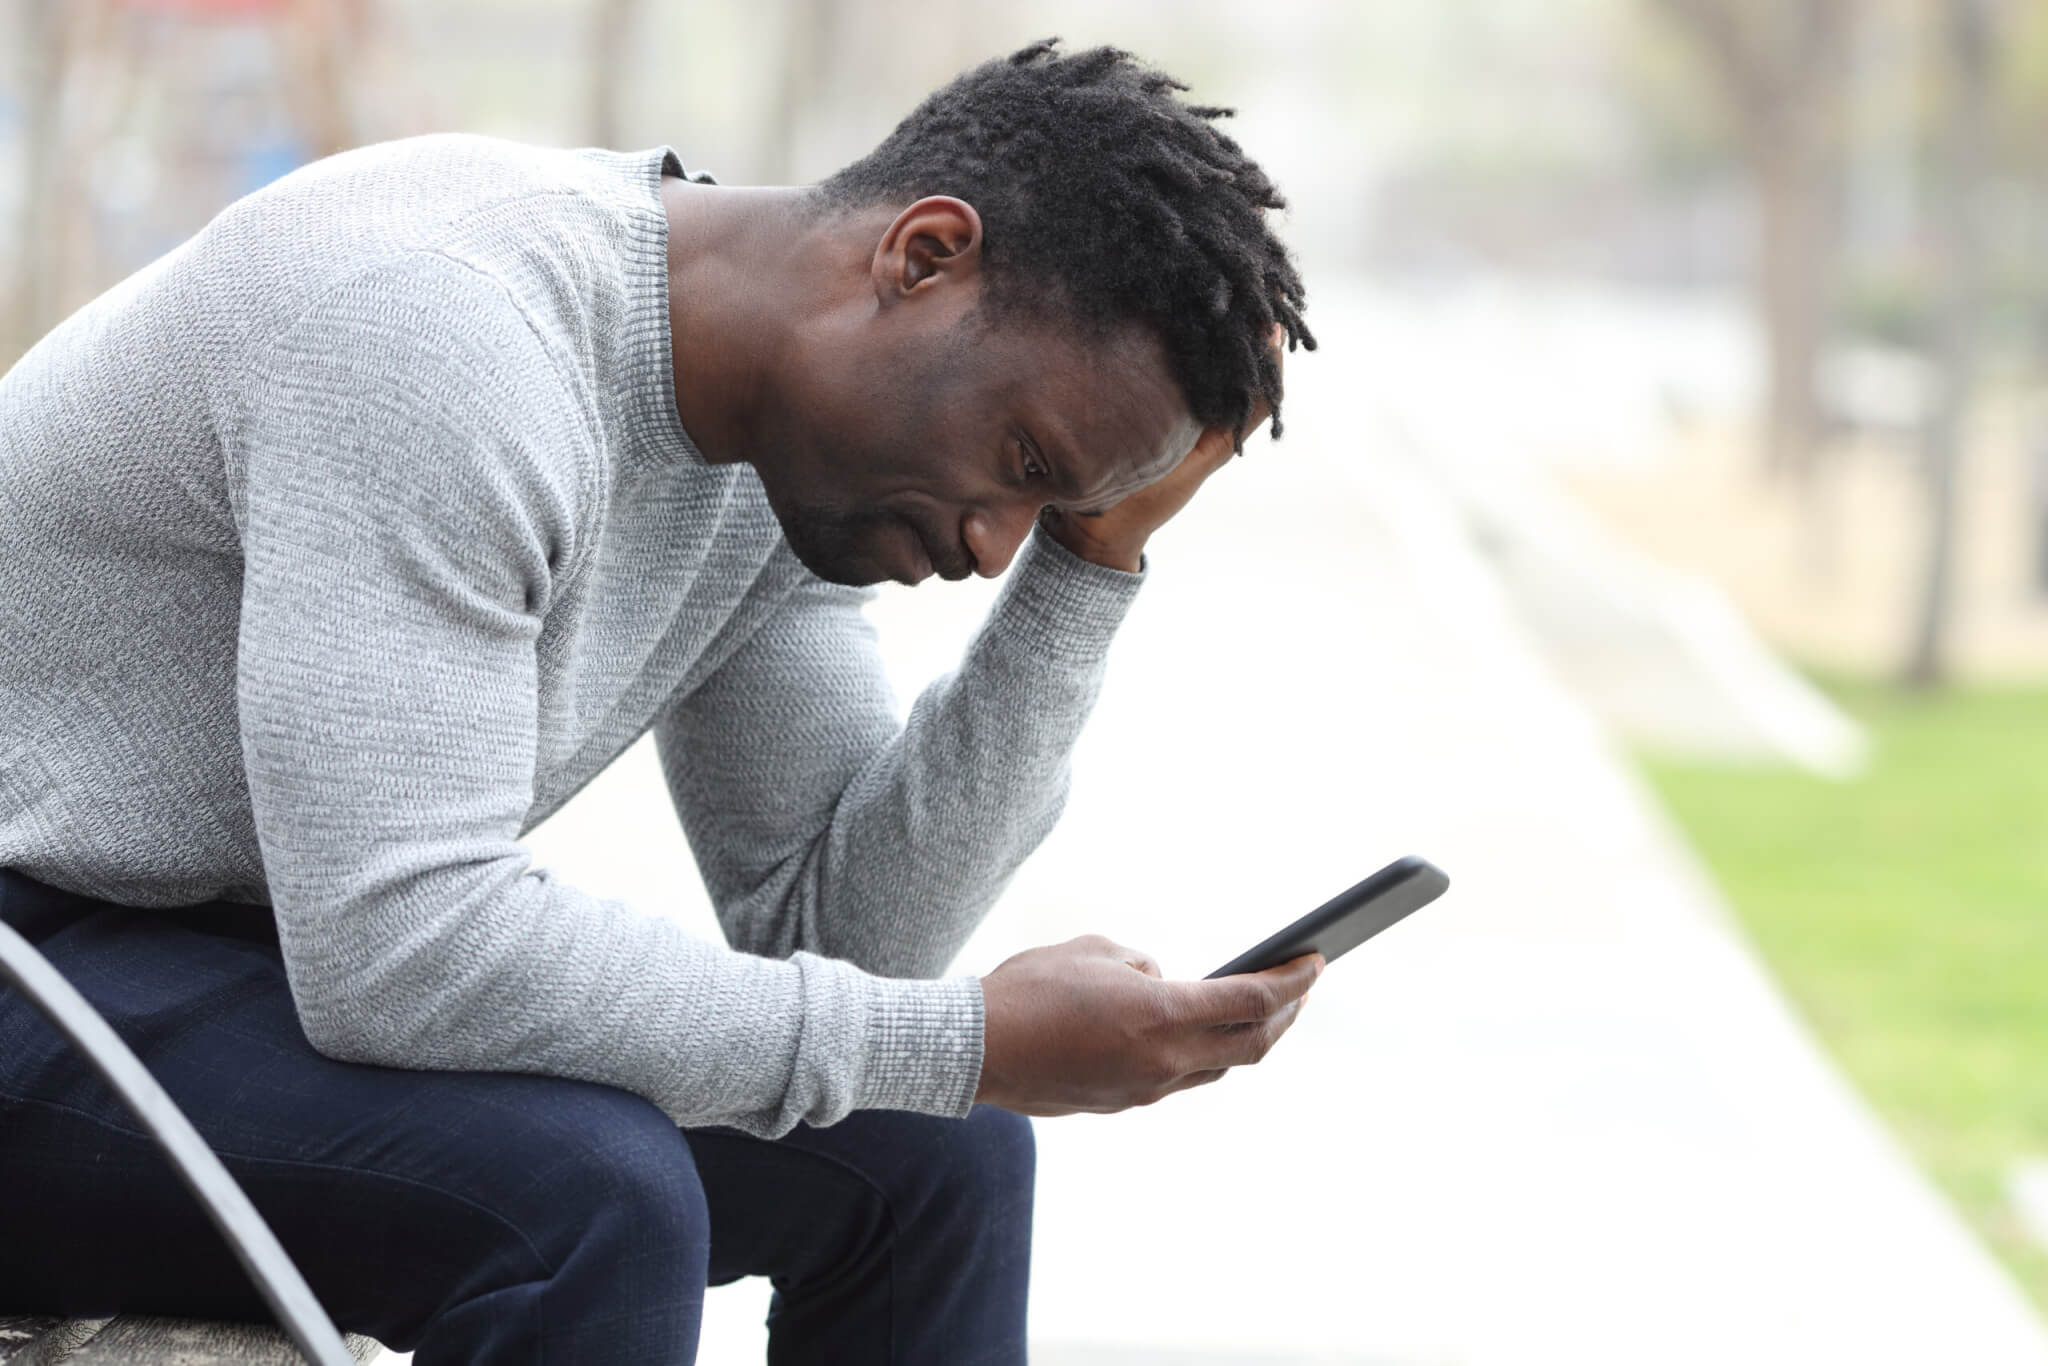 Sad, stressed man checking smartphone